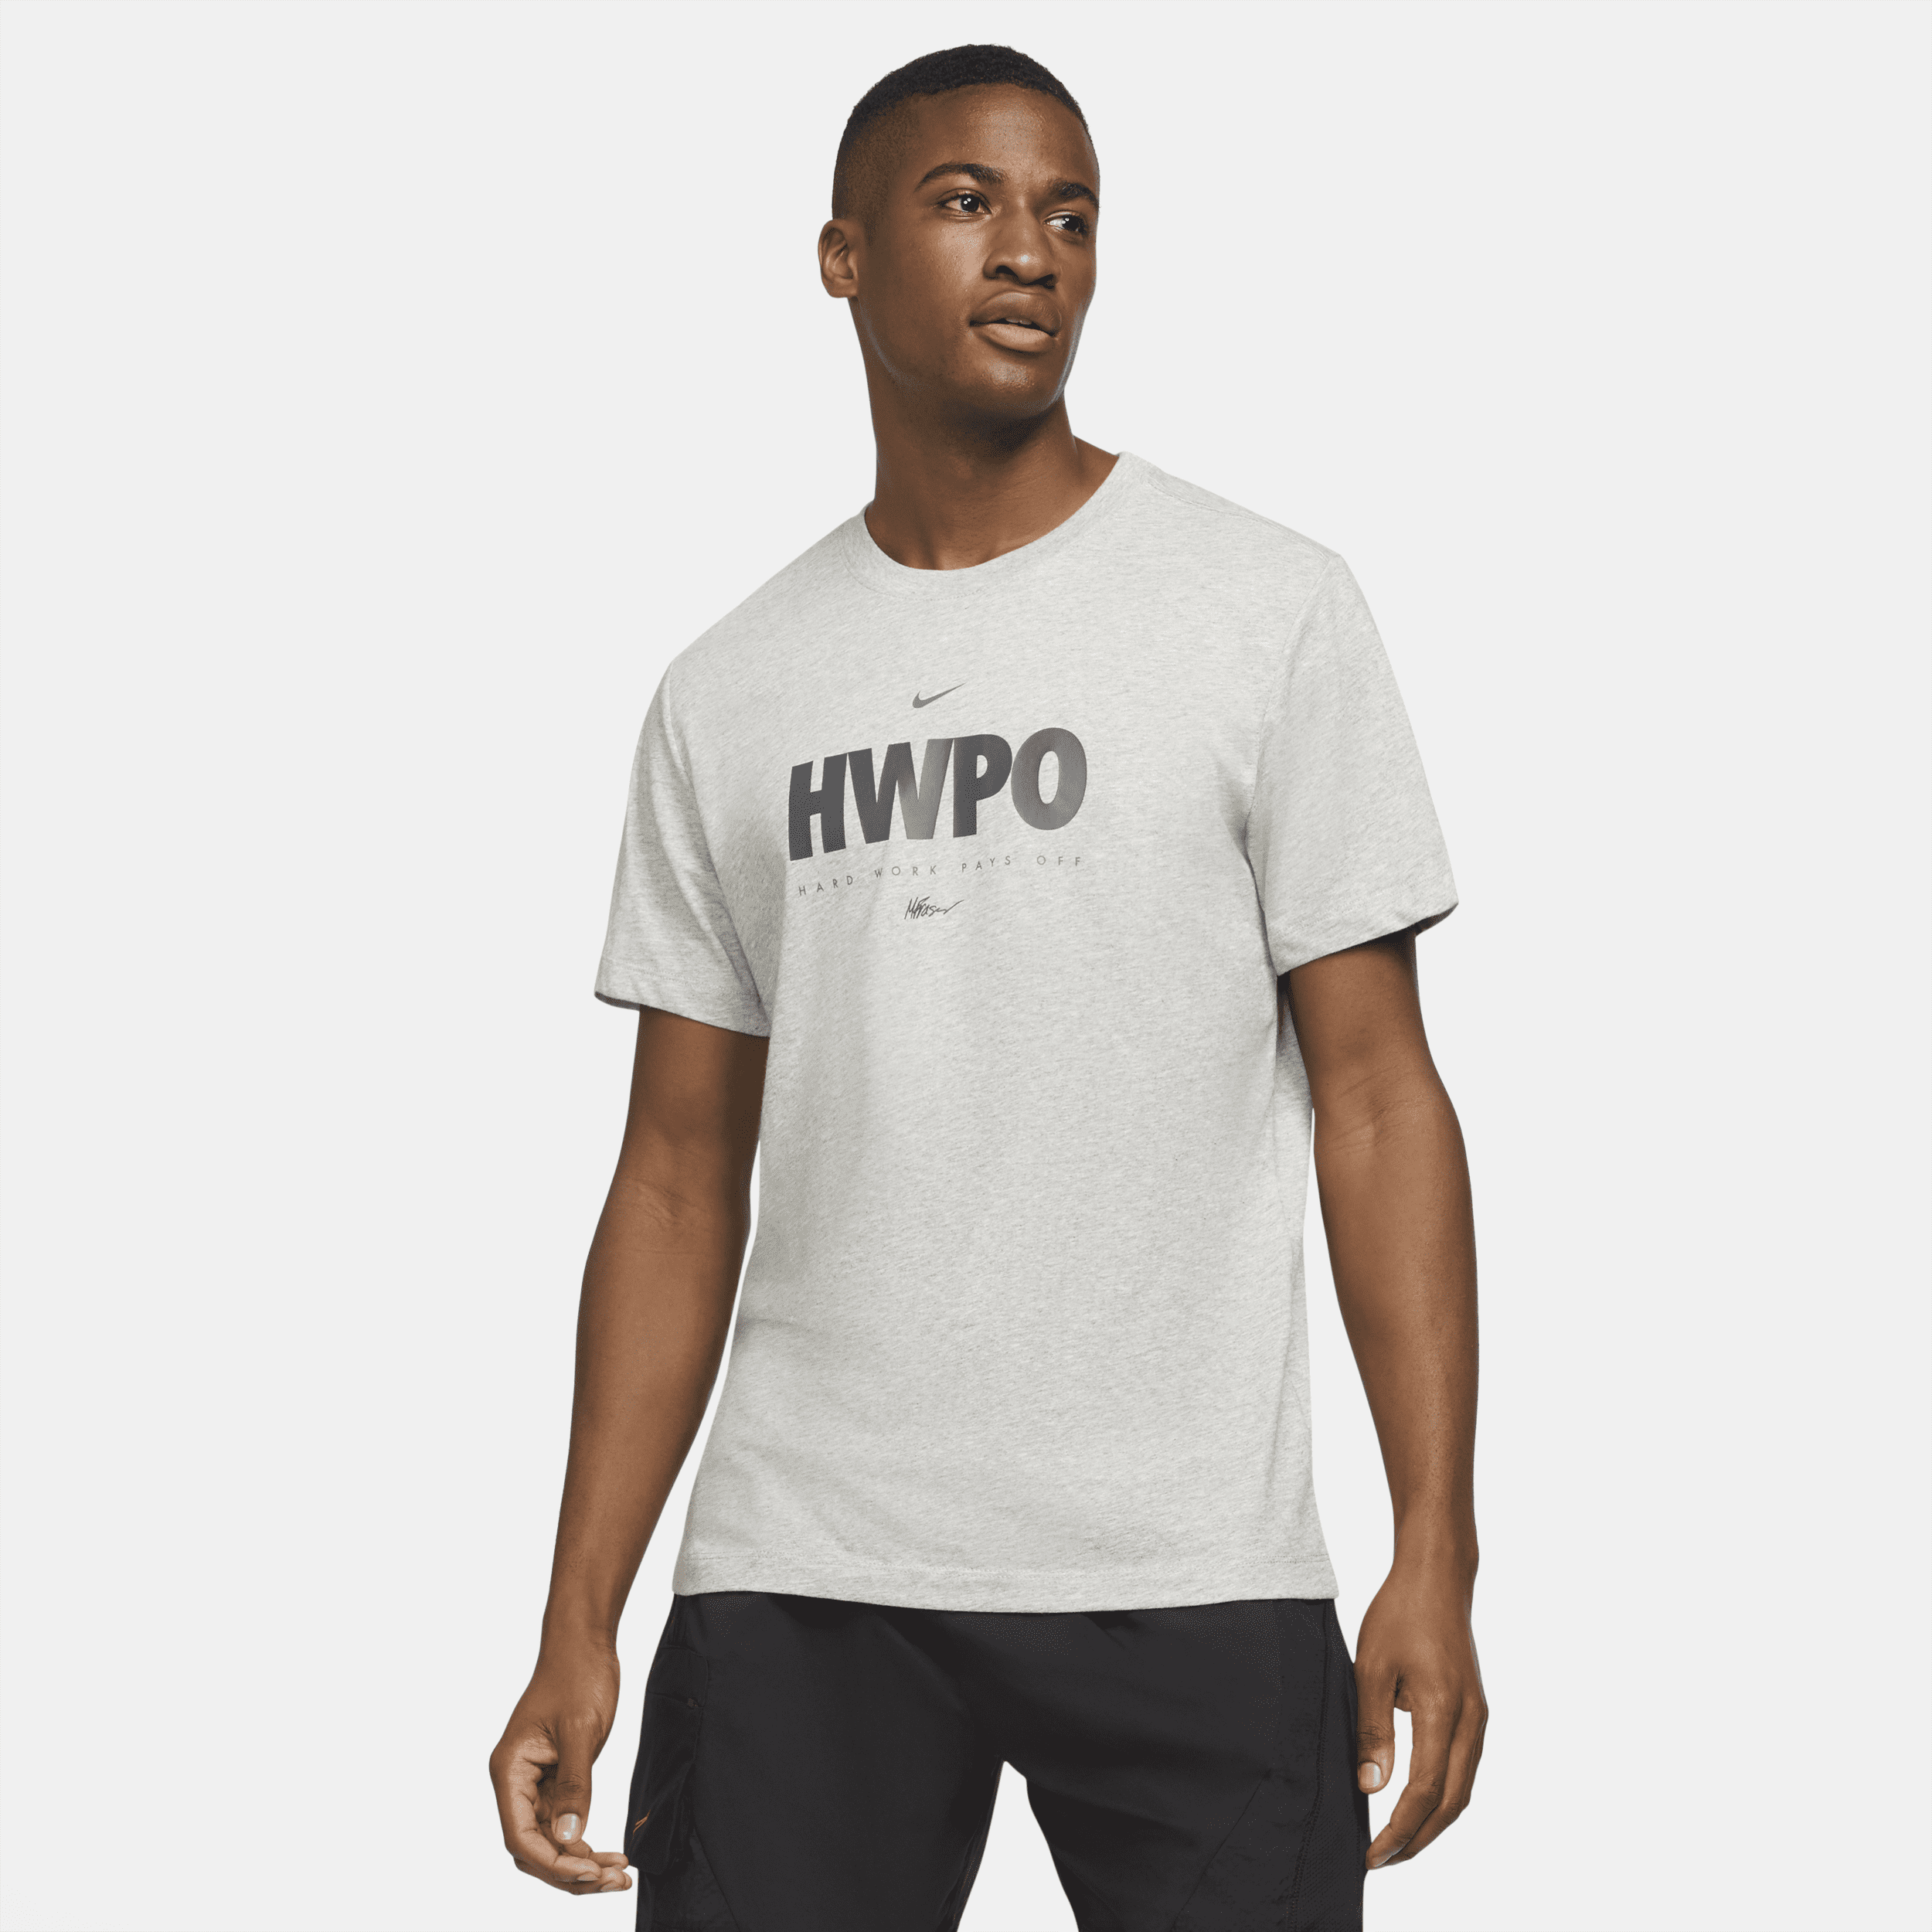 Męski T-shirt treningowy Nike Dri-FIT „HWPO” - Szary